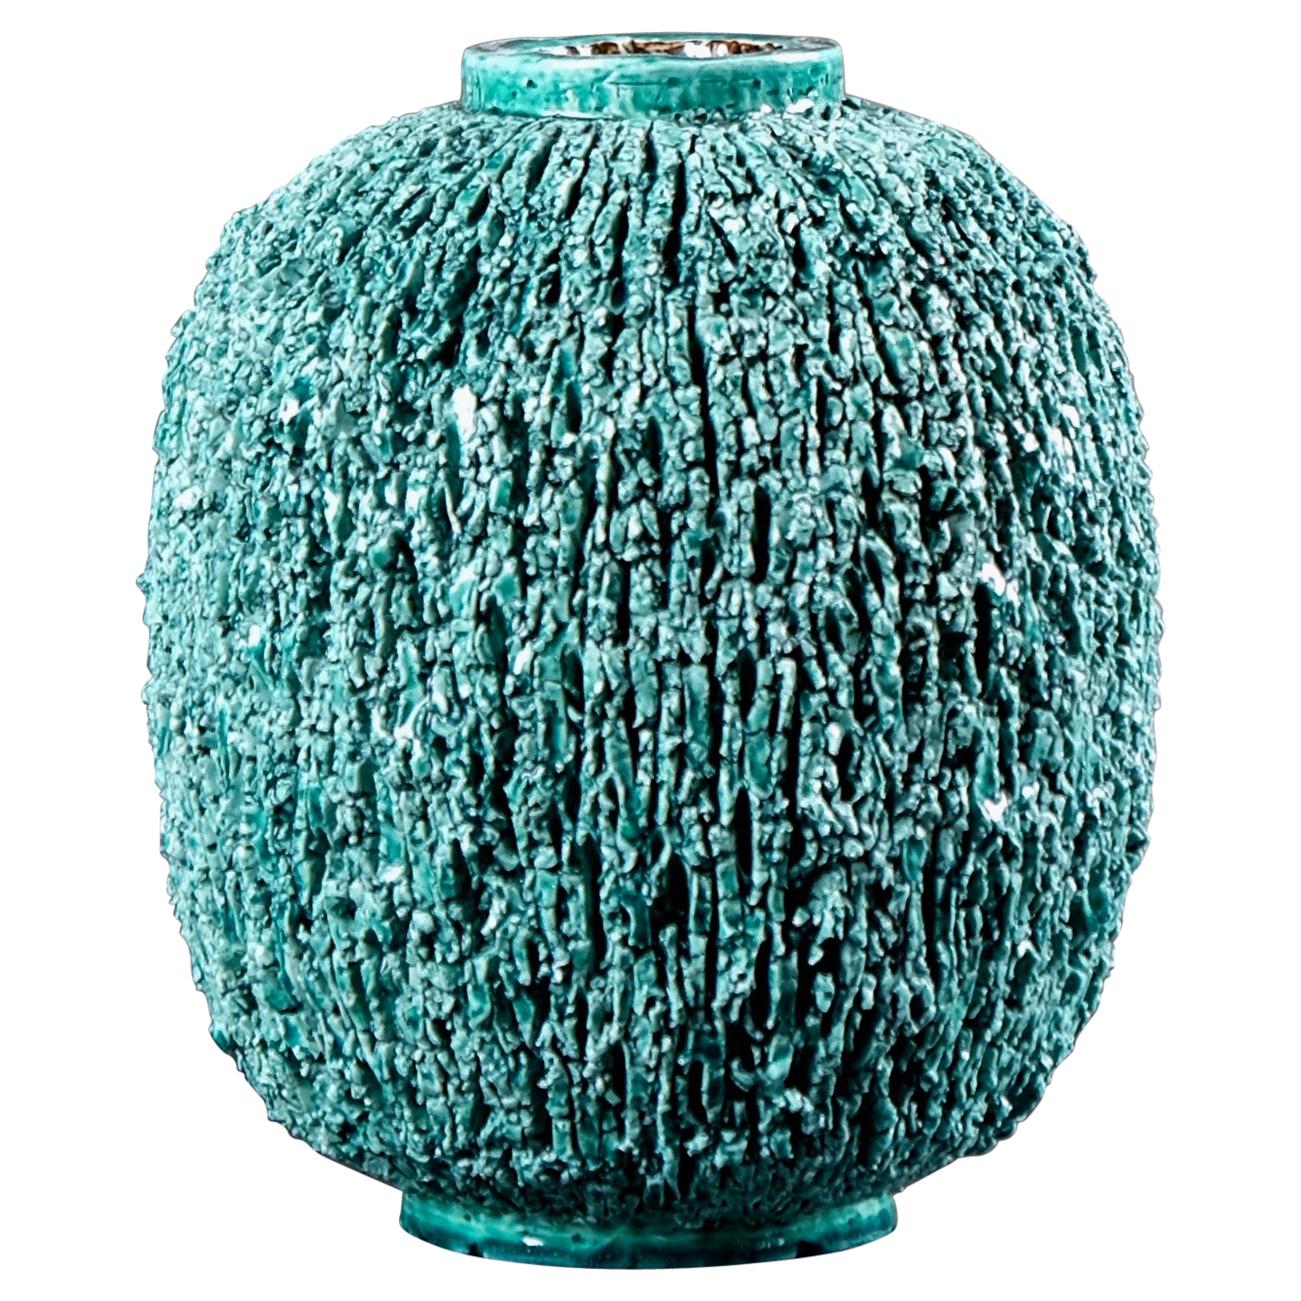 Gunnar Nylund Chamotte Vase by Rörstrand, "Hedgehog Vase", 1950s